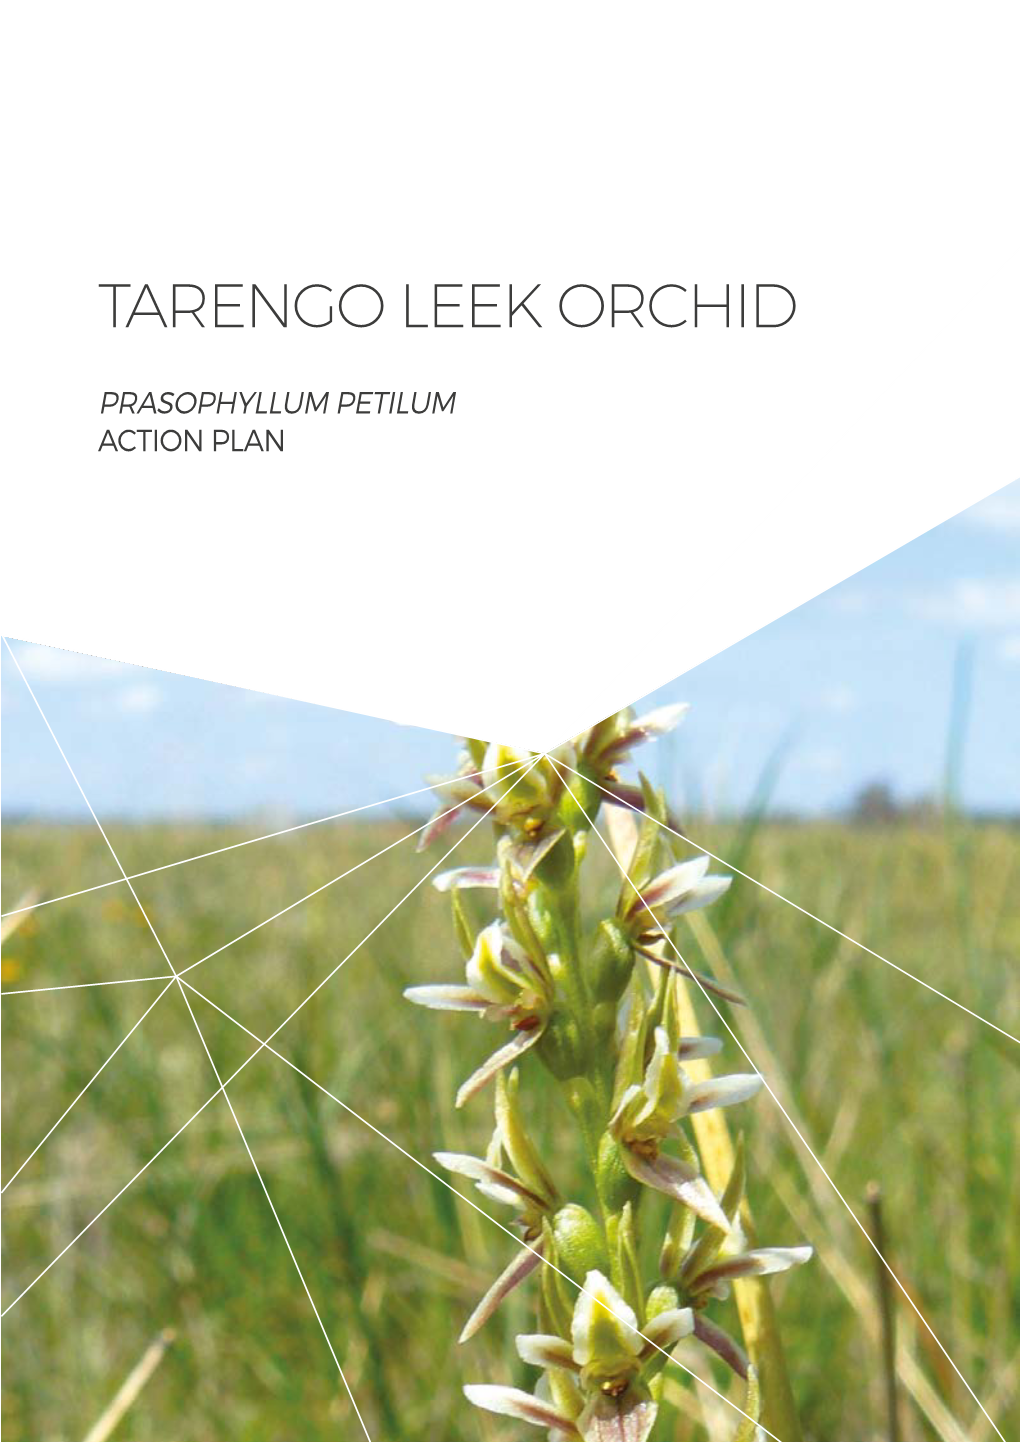 Tarengo Lekk Orchid Action Plan